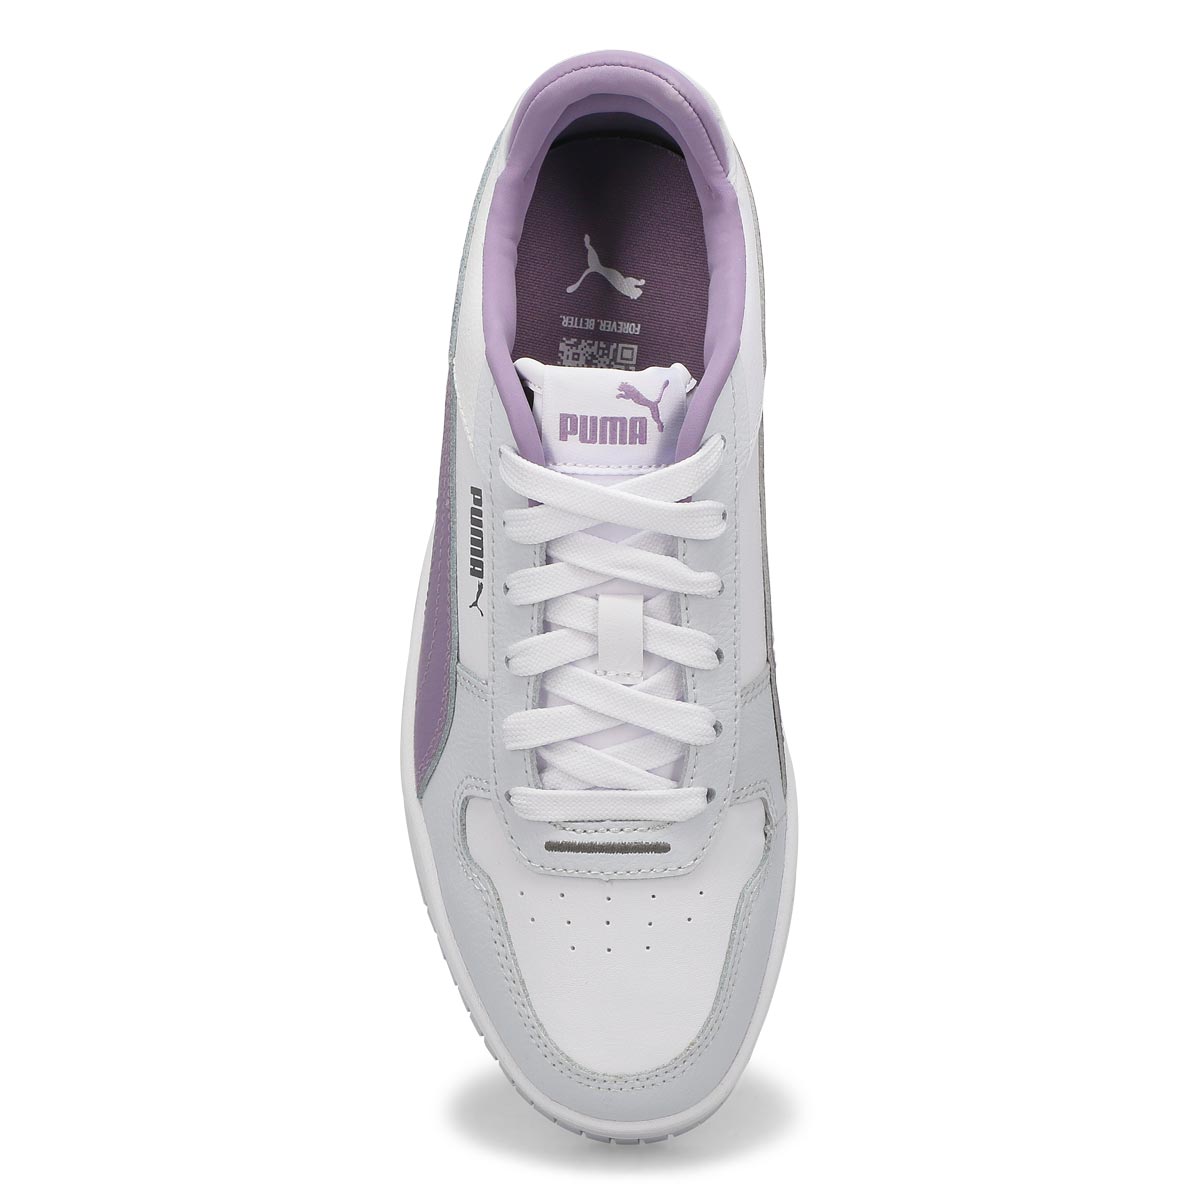 Women's  Carina Street Lace Up Sneaker - White/Pale Plum/Silver